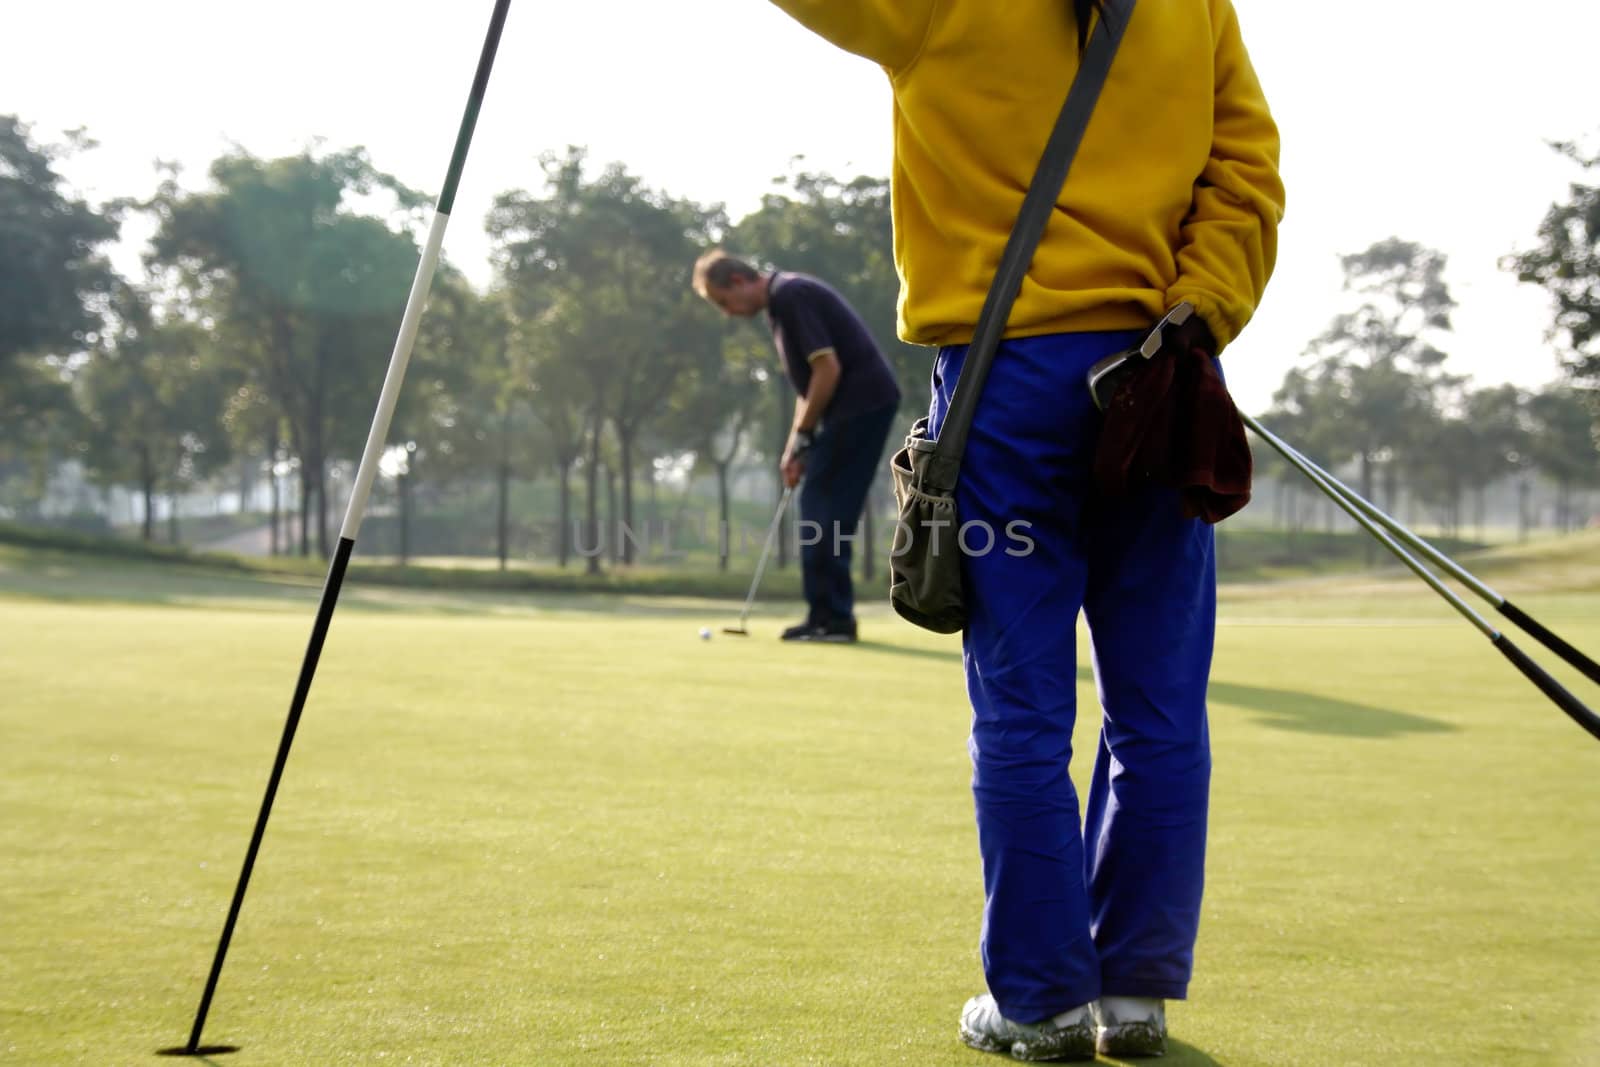 Caddie tending the pin as golfer lines up a putt